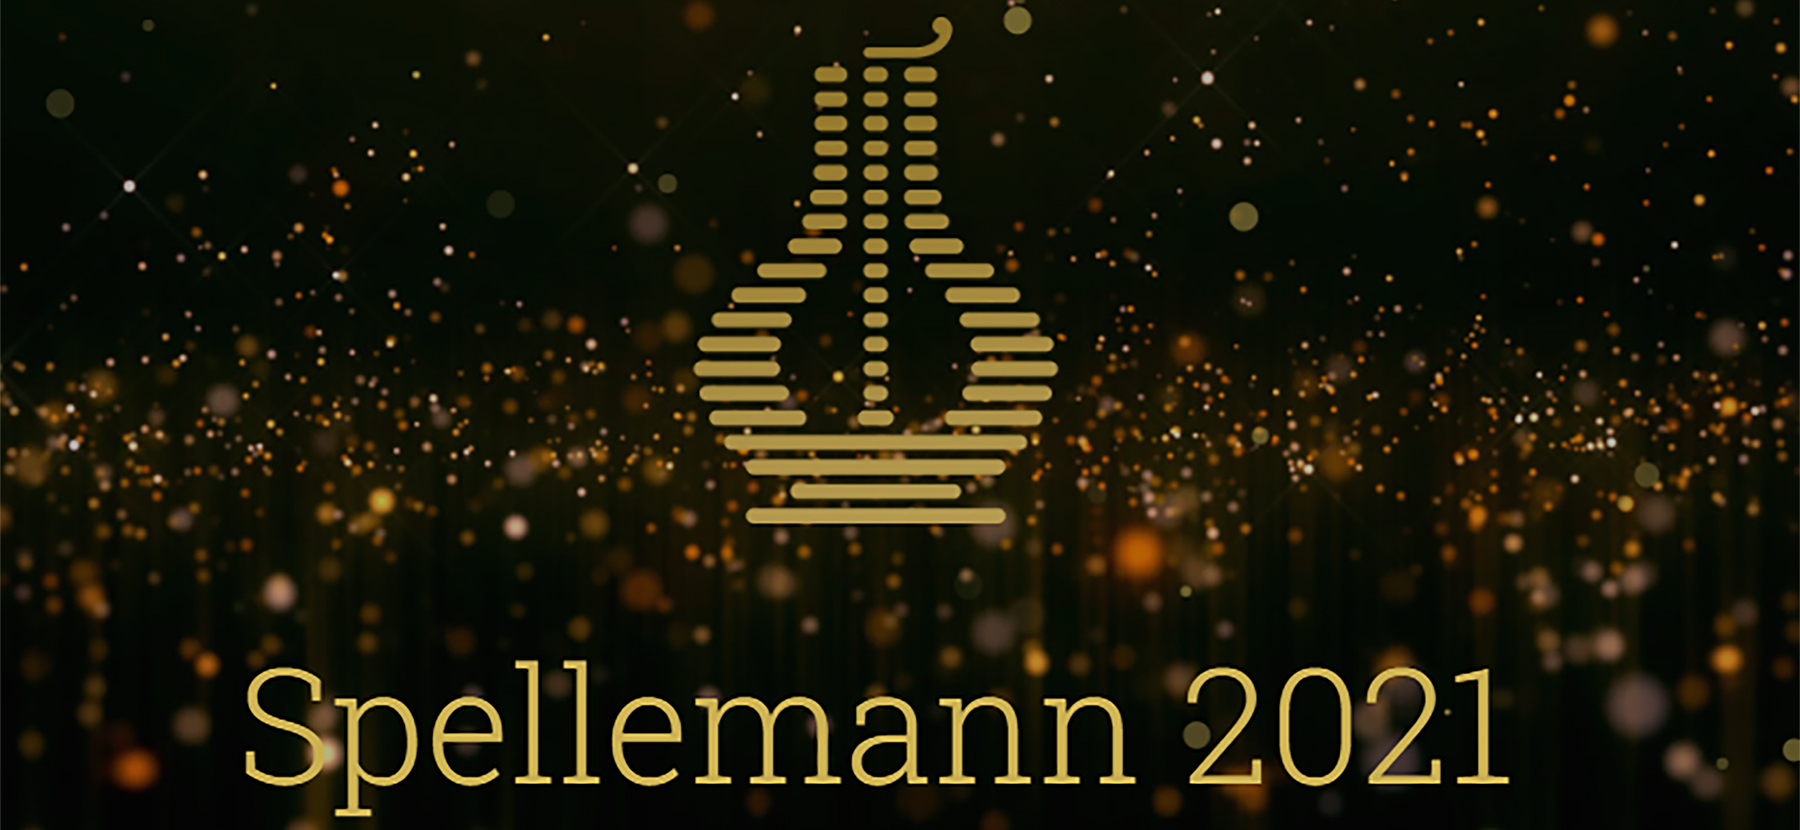 Spellemanns logo